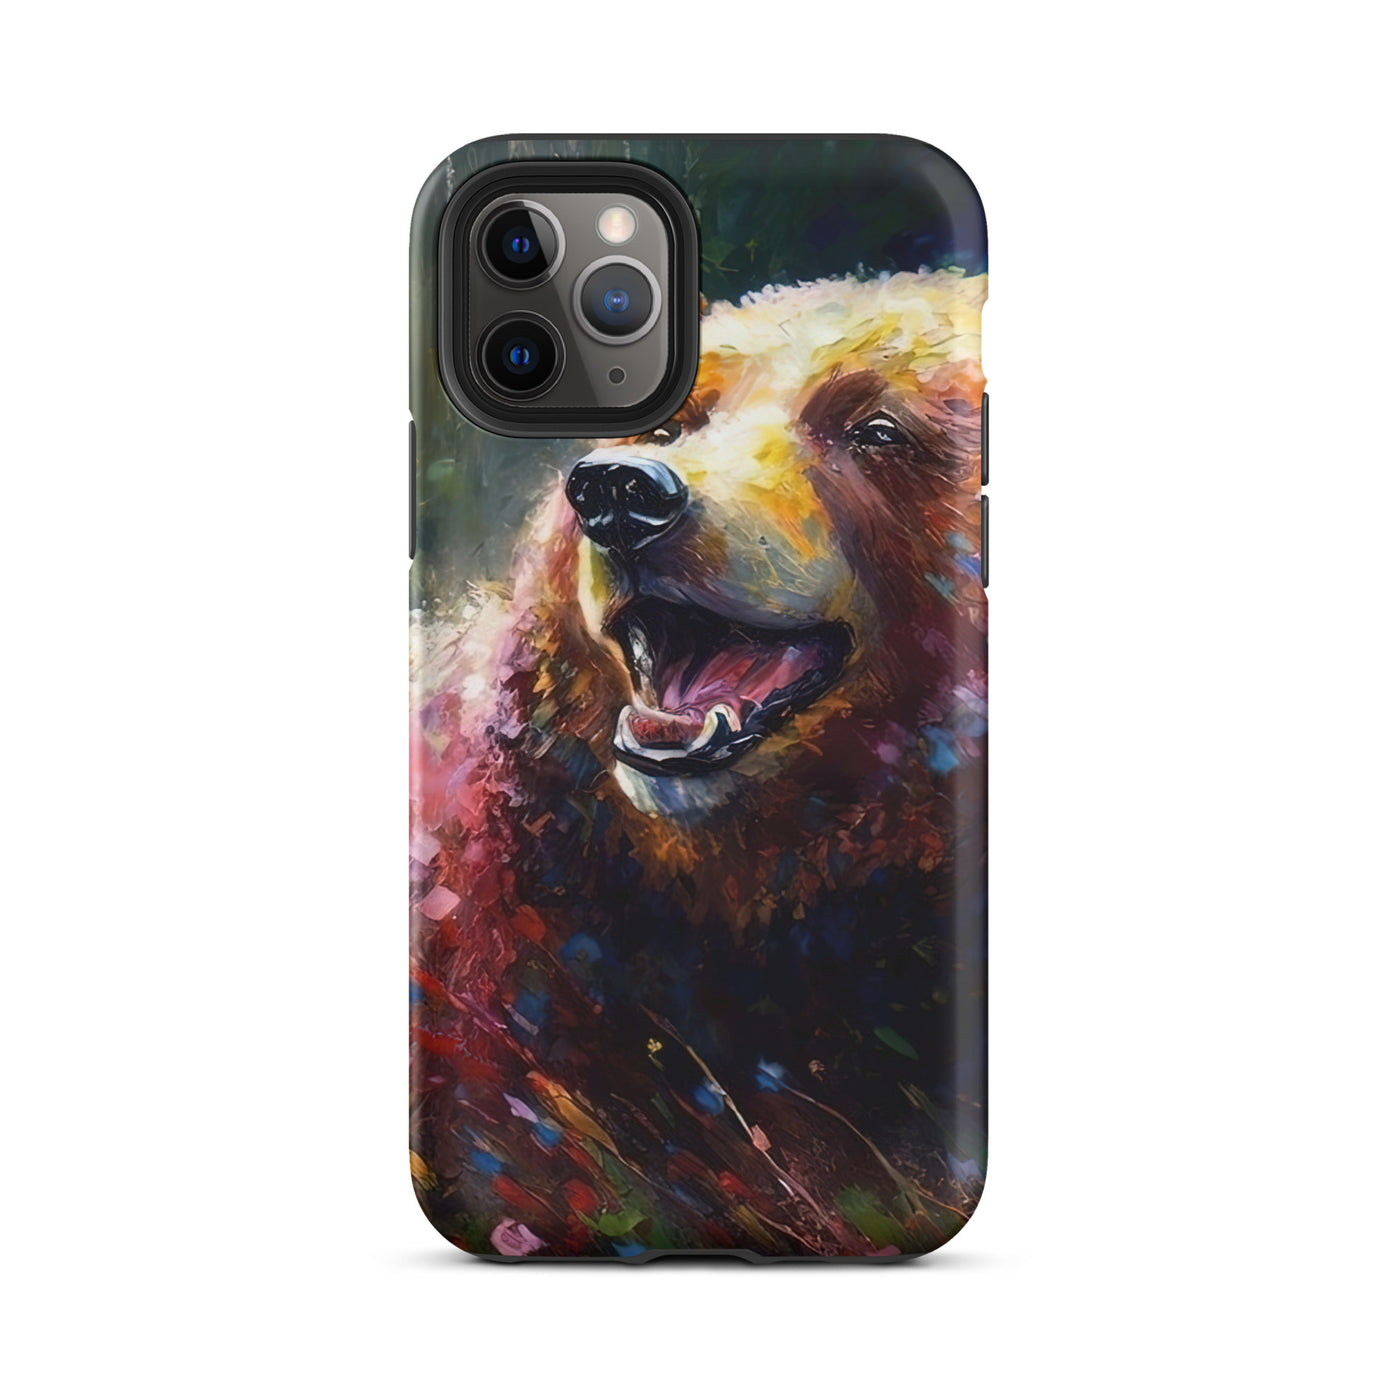 Süßer Bär - Ölmalerei - iPhone Schutzhülle (robust) camping xxx iPhone 11 Pro